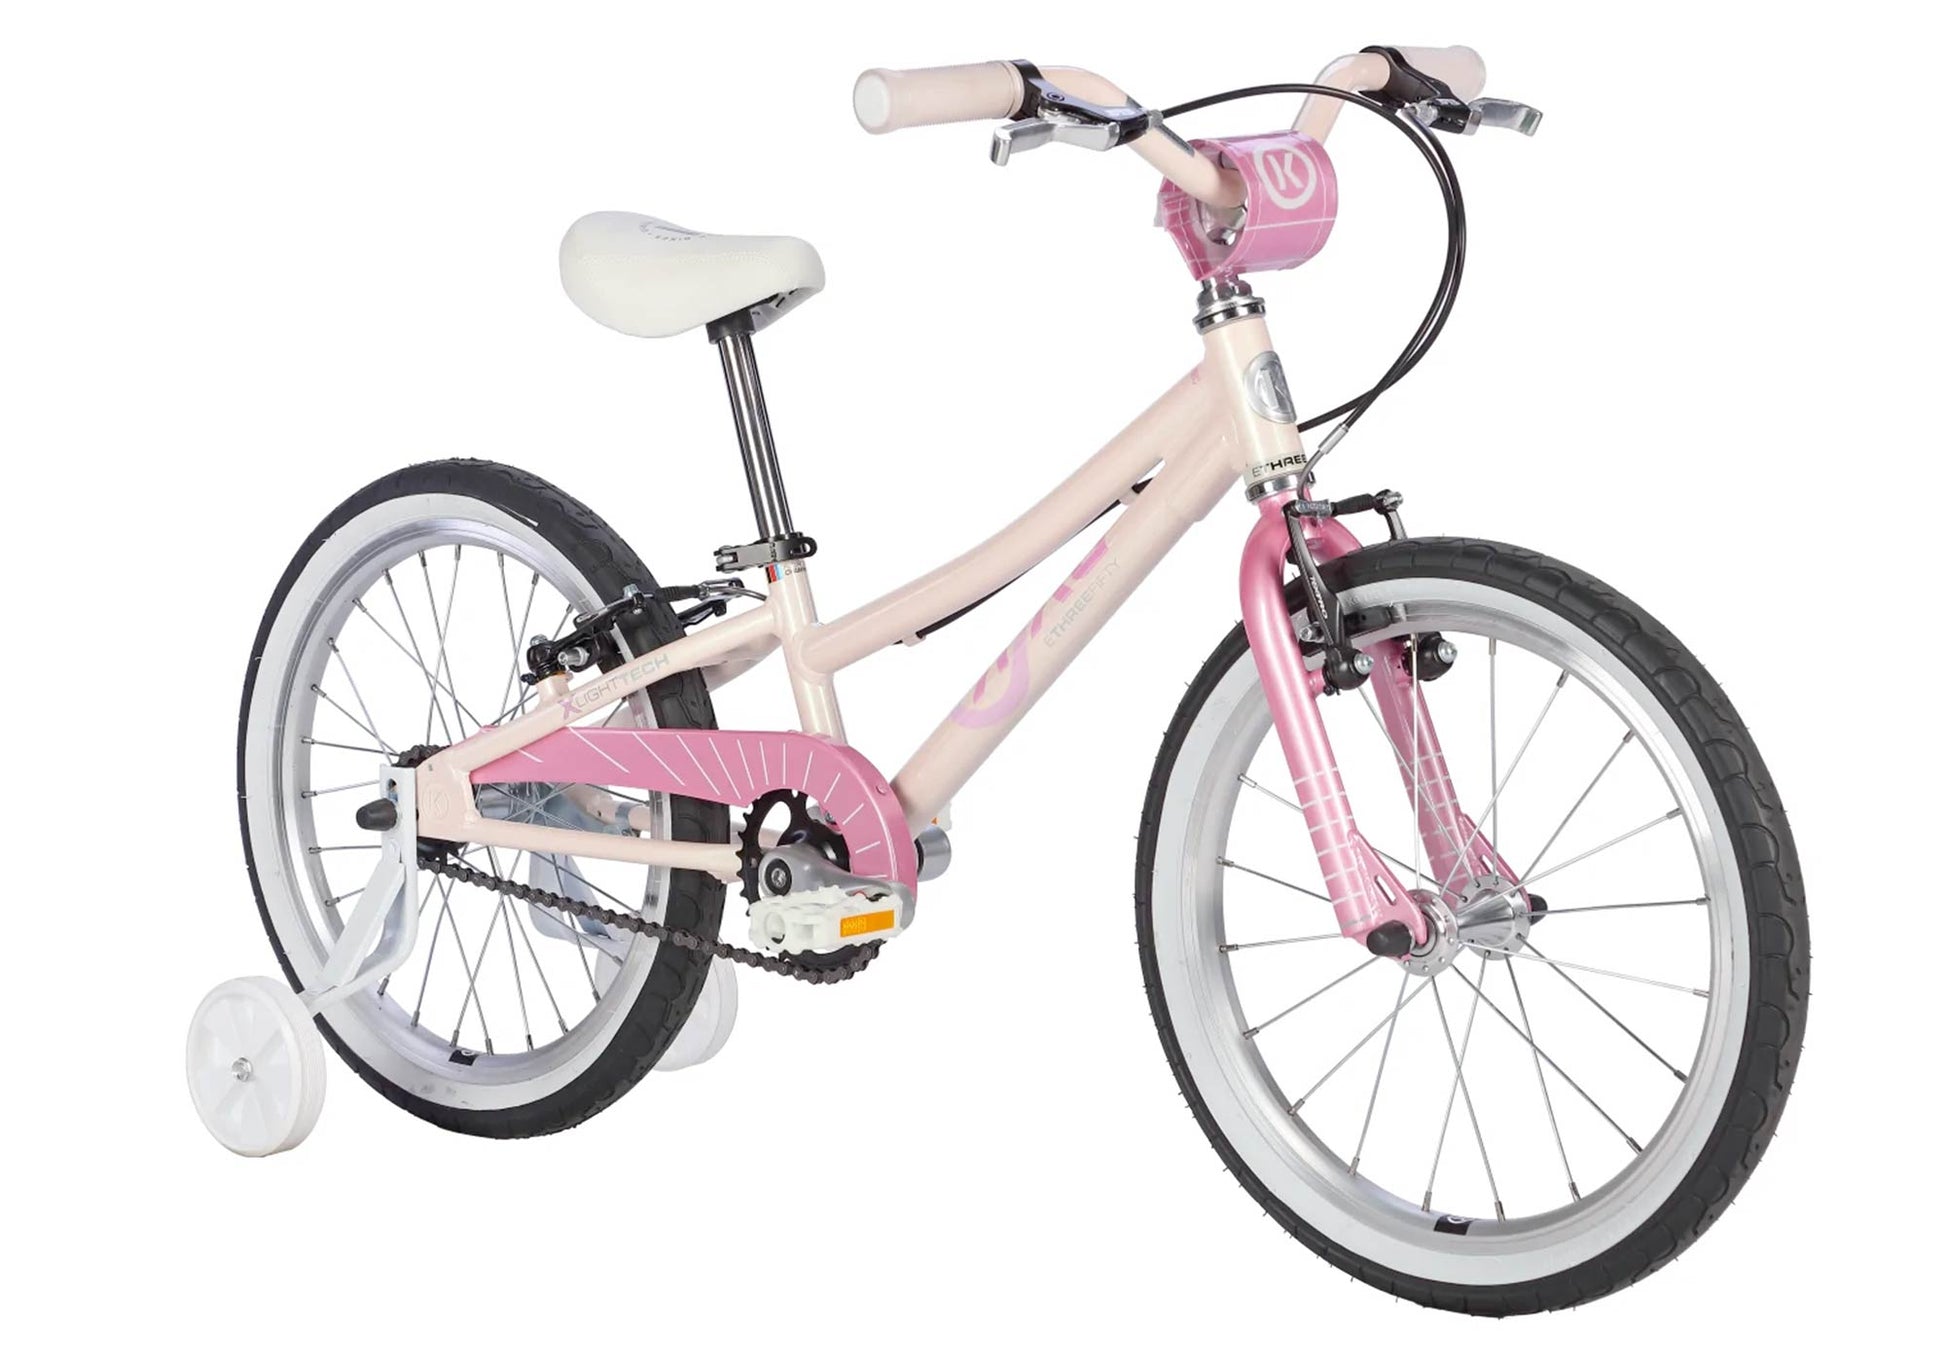 BYK E350 Girls Bike, Pretty Pink - Rider height: 95-117cm